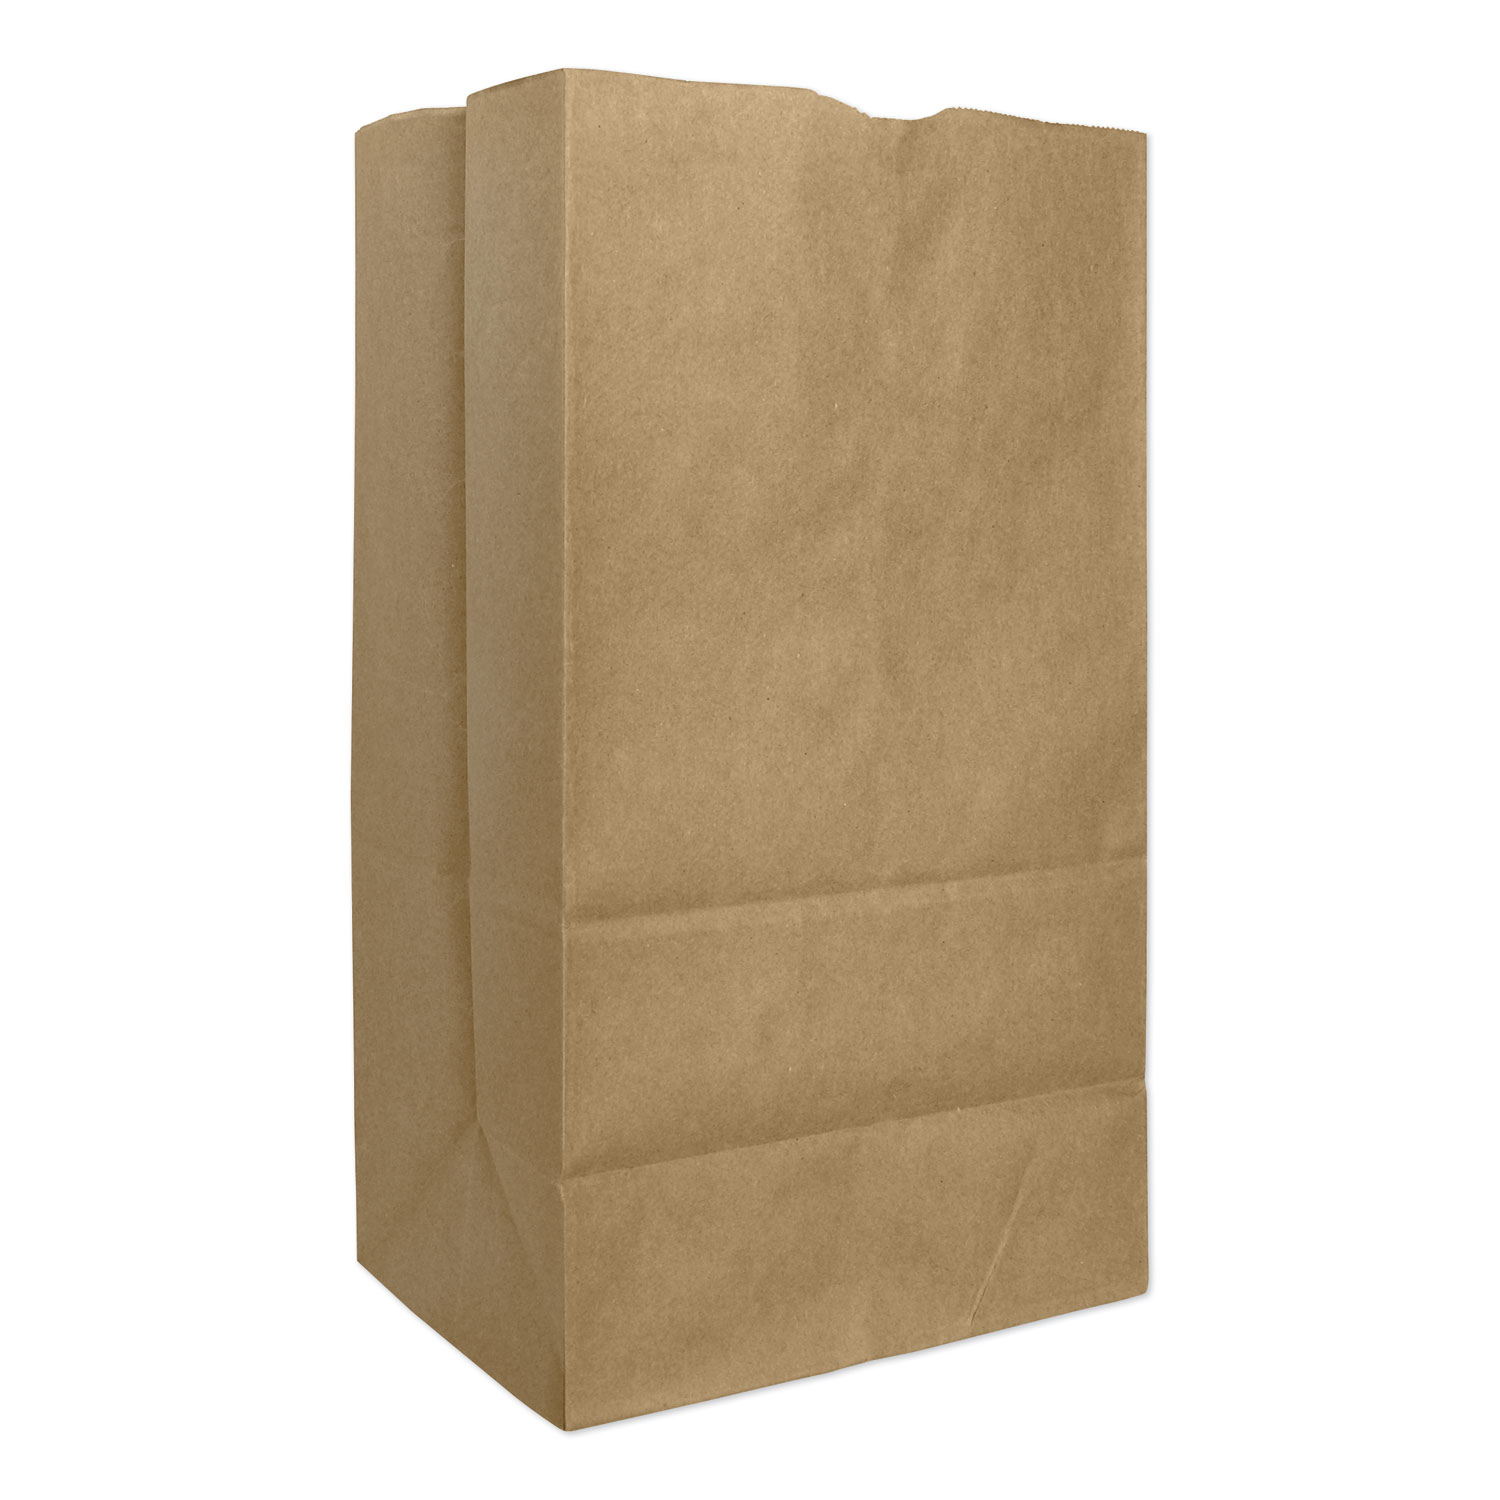  General 30926 Grocery Paper Bags, 57 lbs Capacity, #25, 8.25w x 6.13d x 15.88h, Kraft, 500 Bags (BAGGX2560S) 